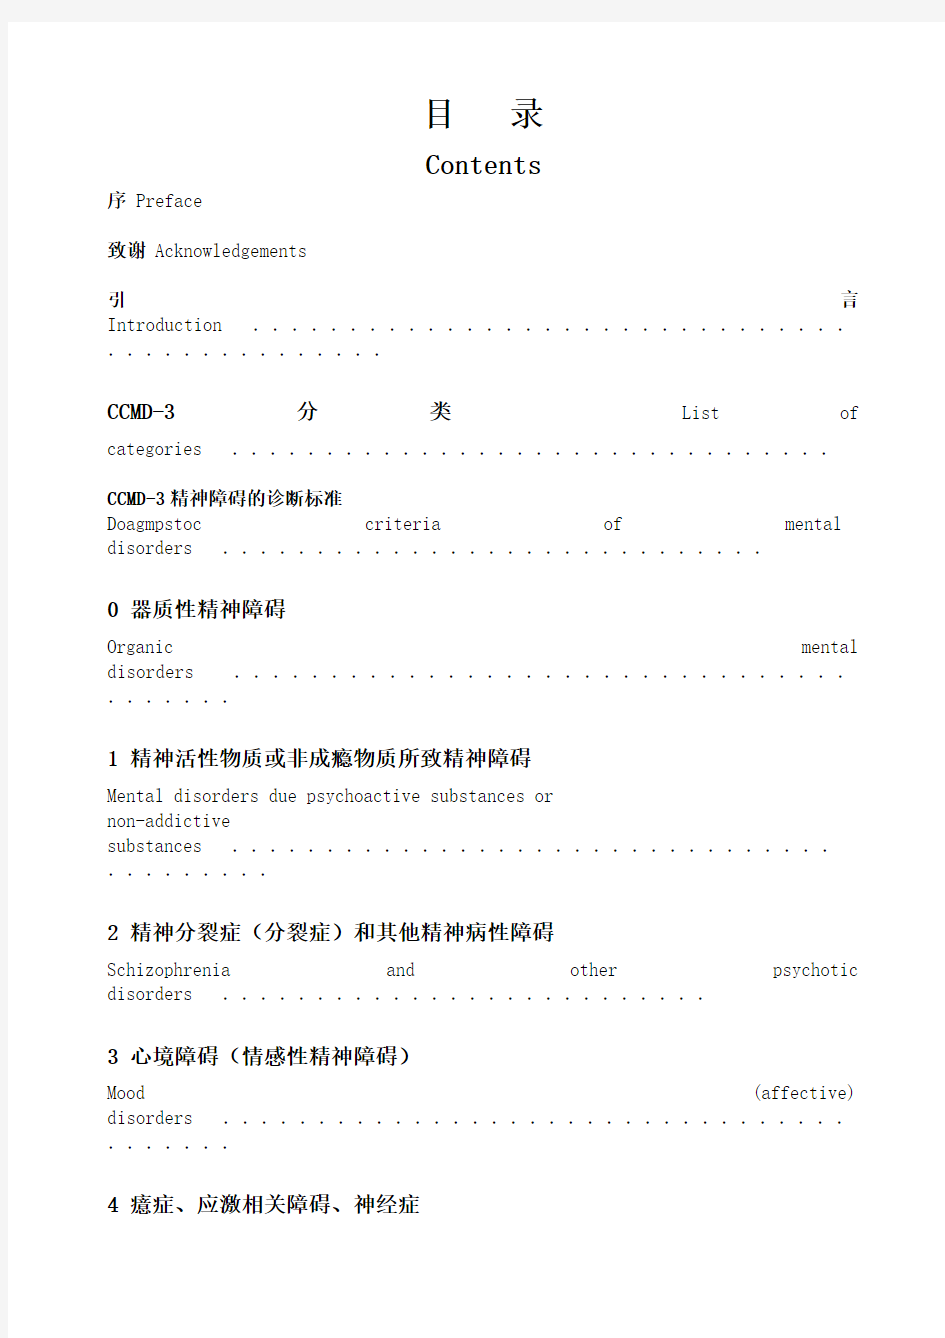 CCMD3中国精神障碍分类及诊断标准(含英文名称)